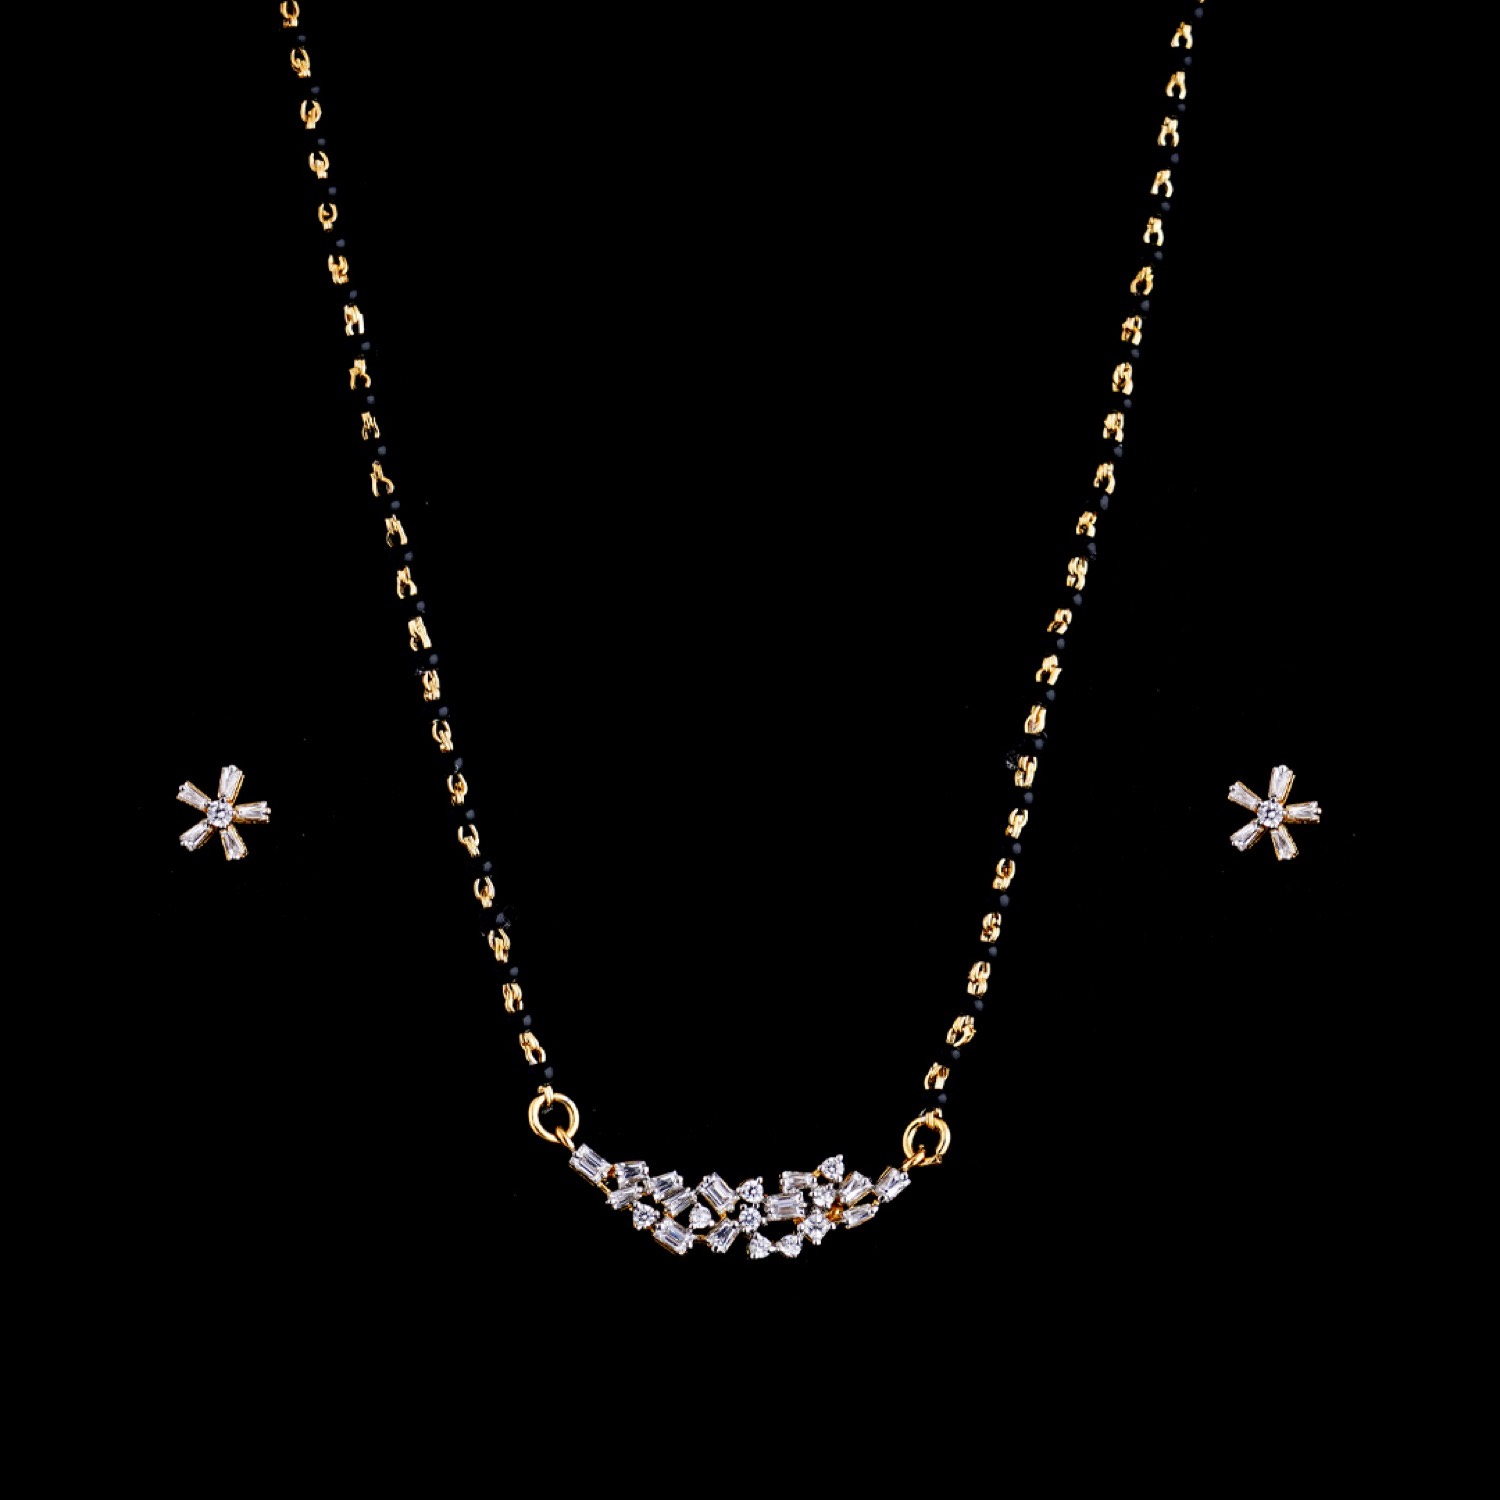 varam_swarovski_white_stone_mangalsutra_design_gold_plated_chain_with_earrings_1-1